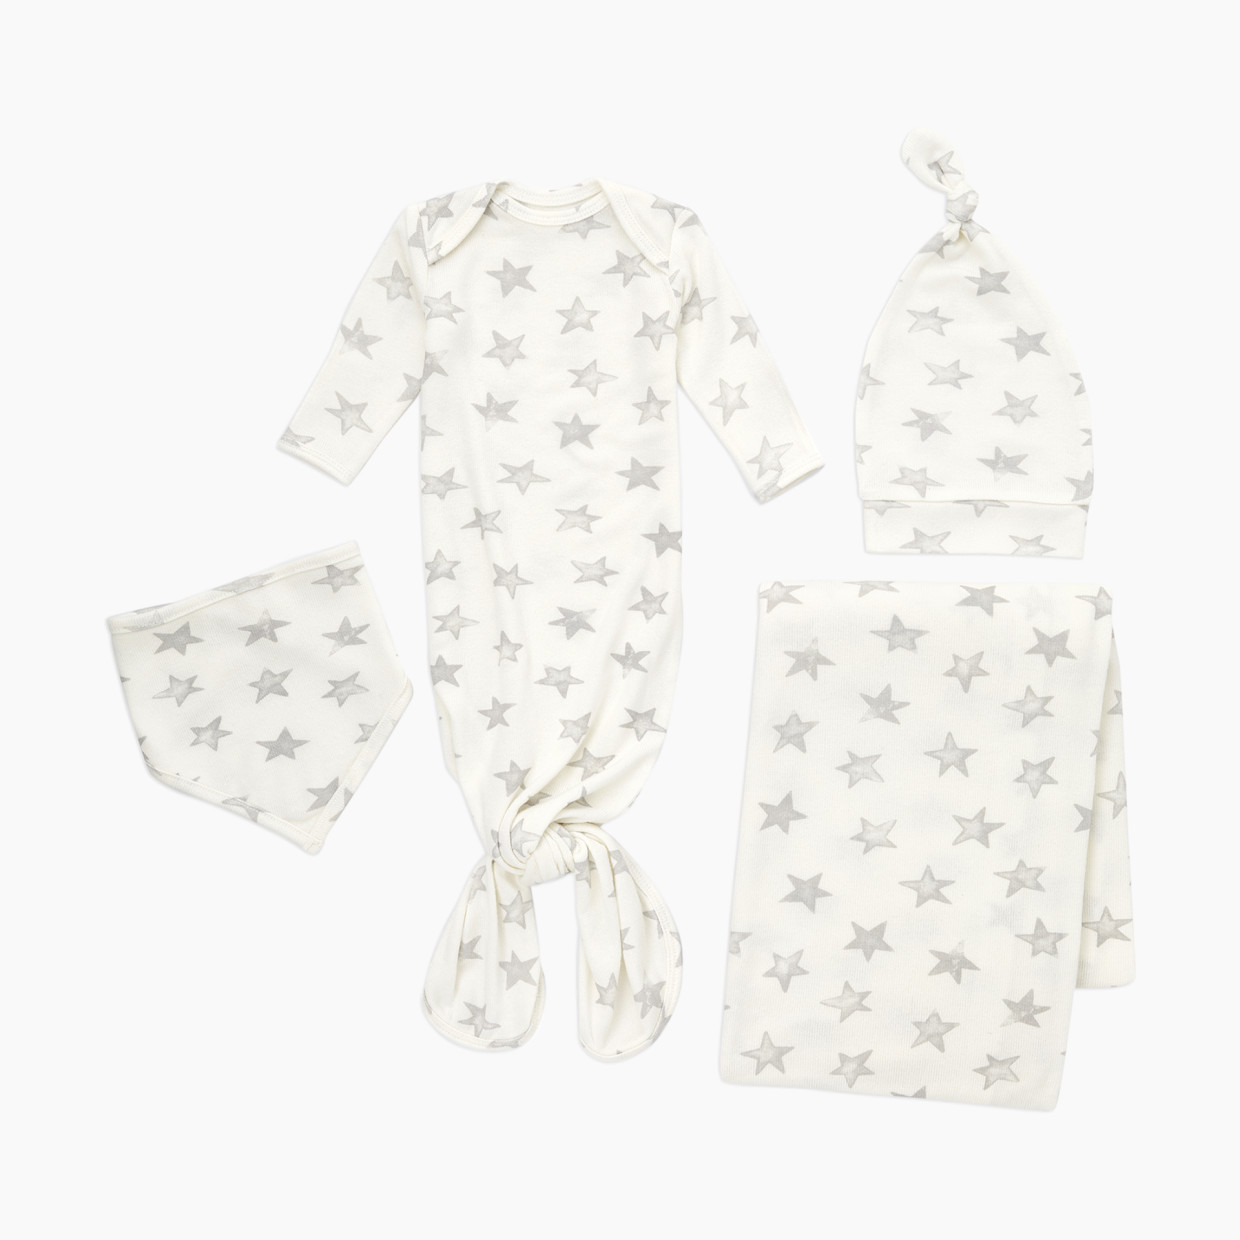 Aden + Anais Snuggle Knit Newborn Gift Set - Star.